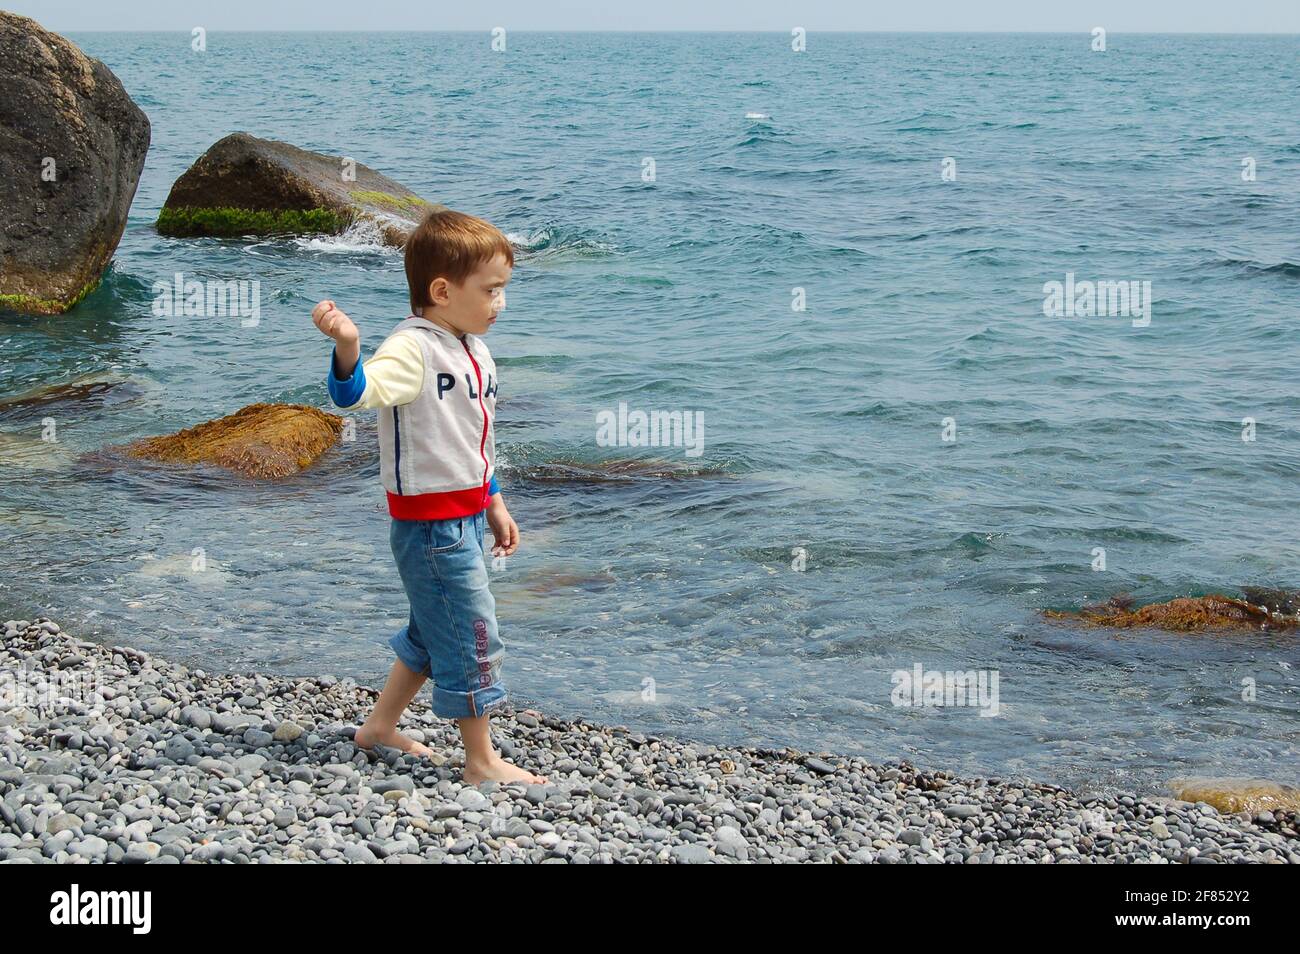 Yalta, Ukraine - 03.05.2009: A boy runs along the seashore. Children love to play with rocks on the pebble beach. Stock Photo